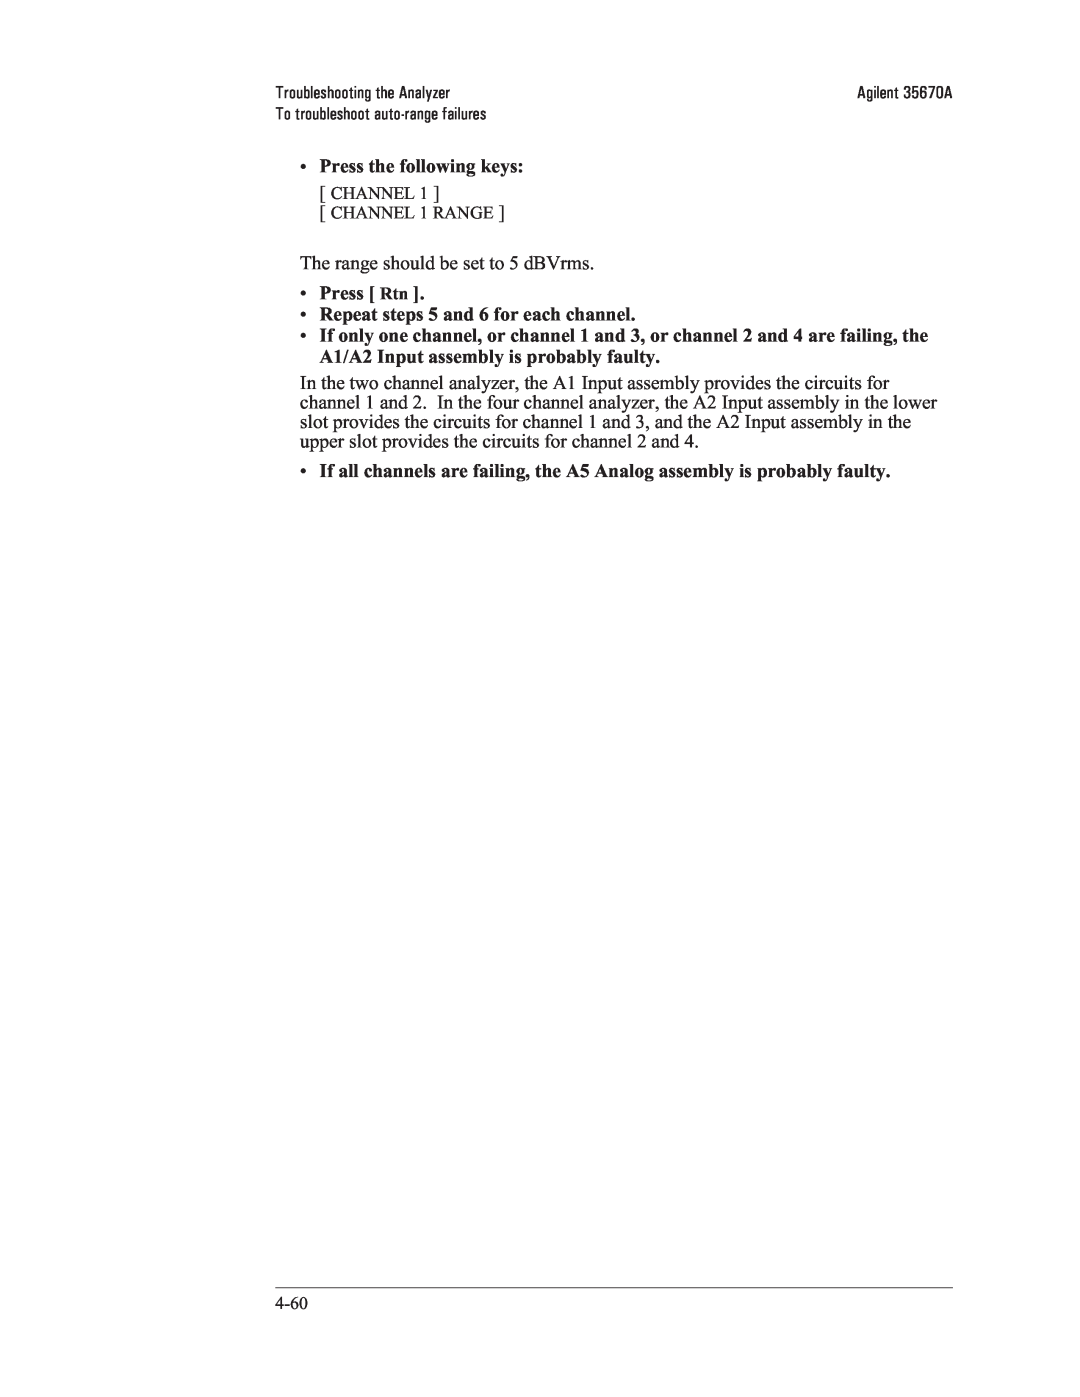 Agilent Technologies 35670-90066 manual •Press the following keys 